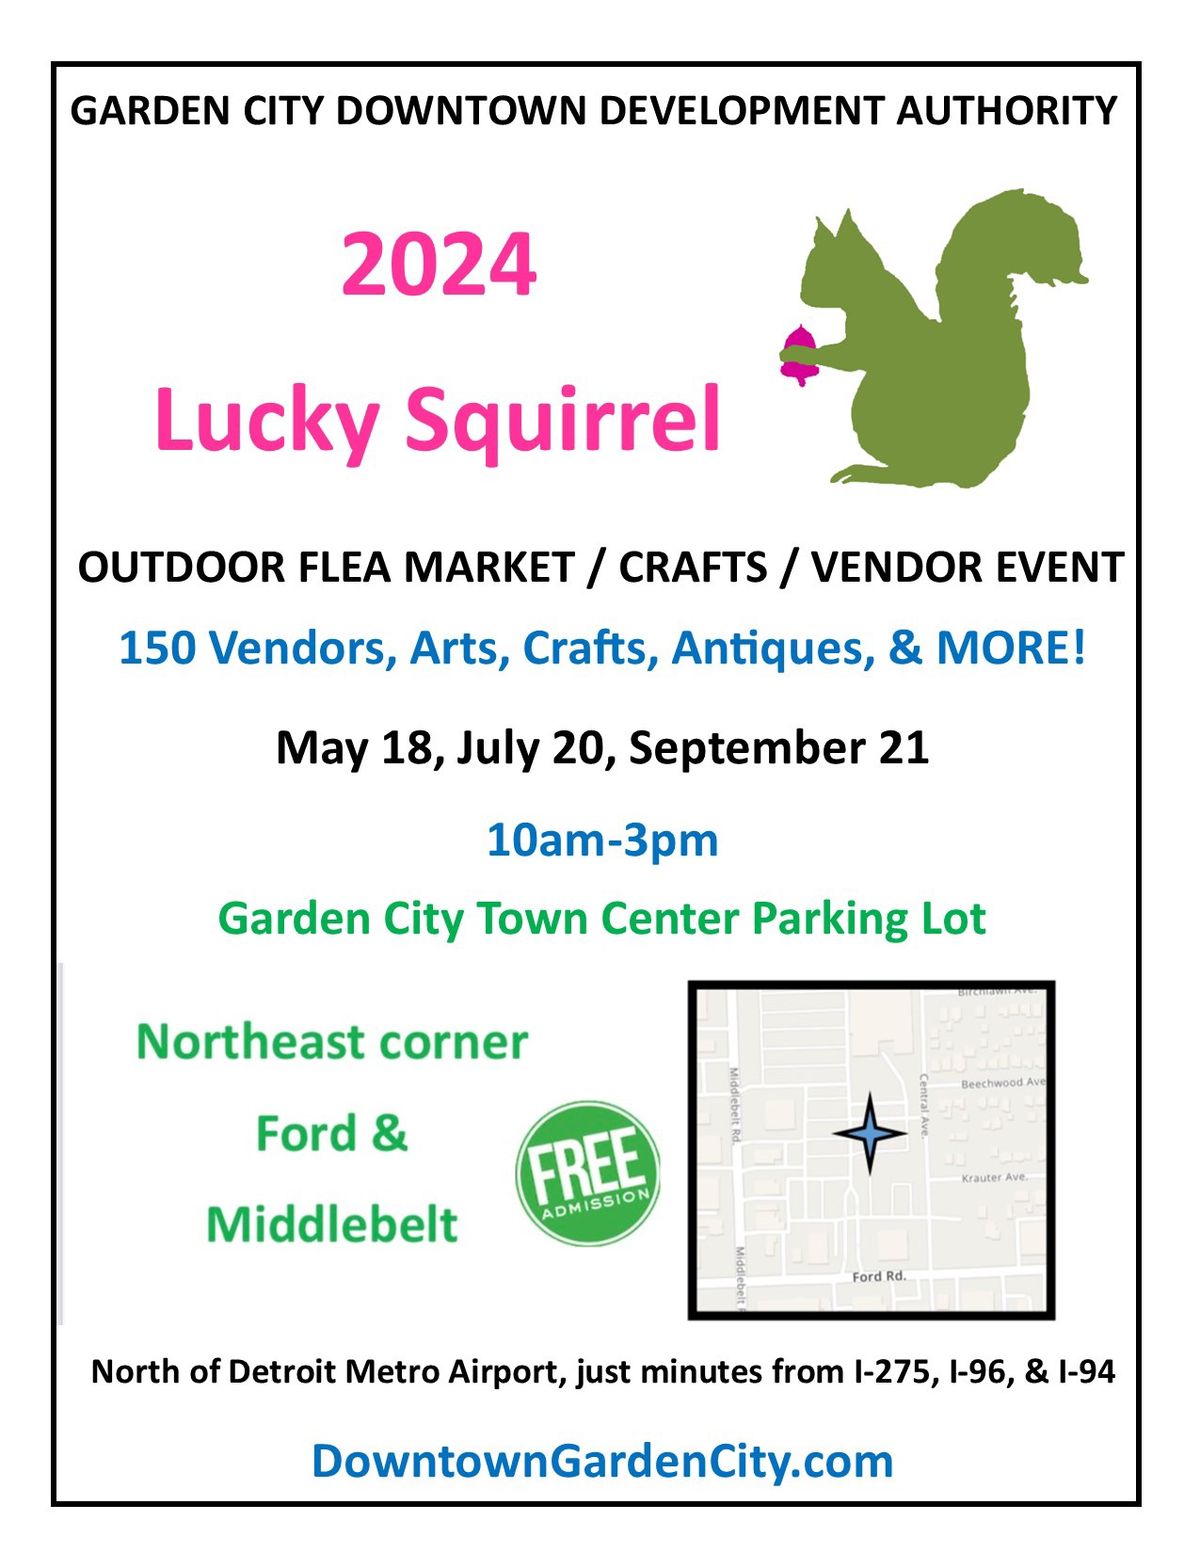 Lucky Squirrel Craft & Vendor event